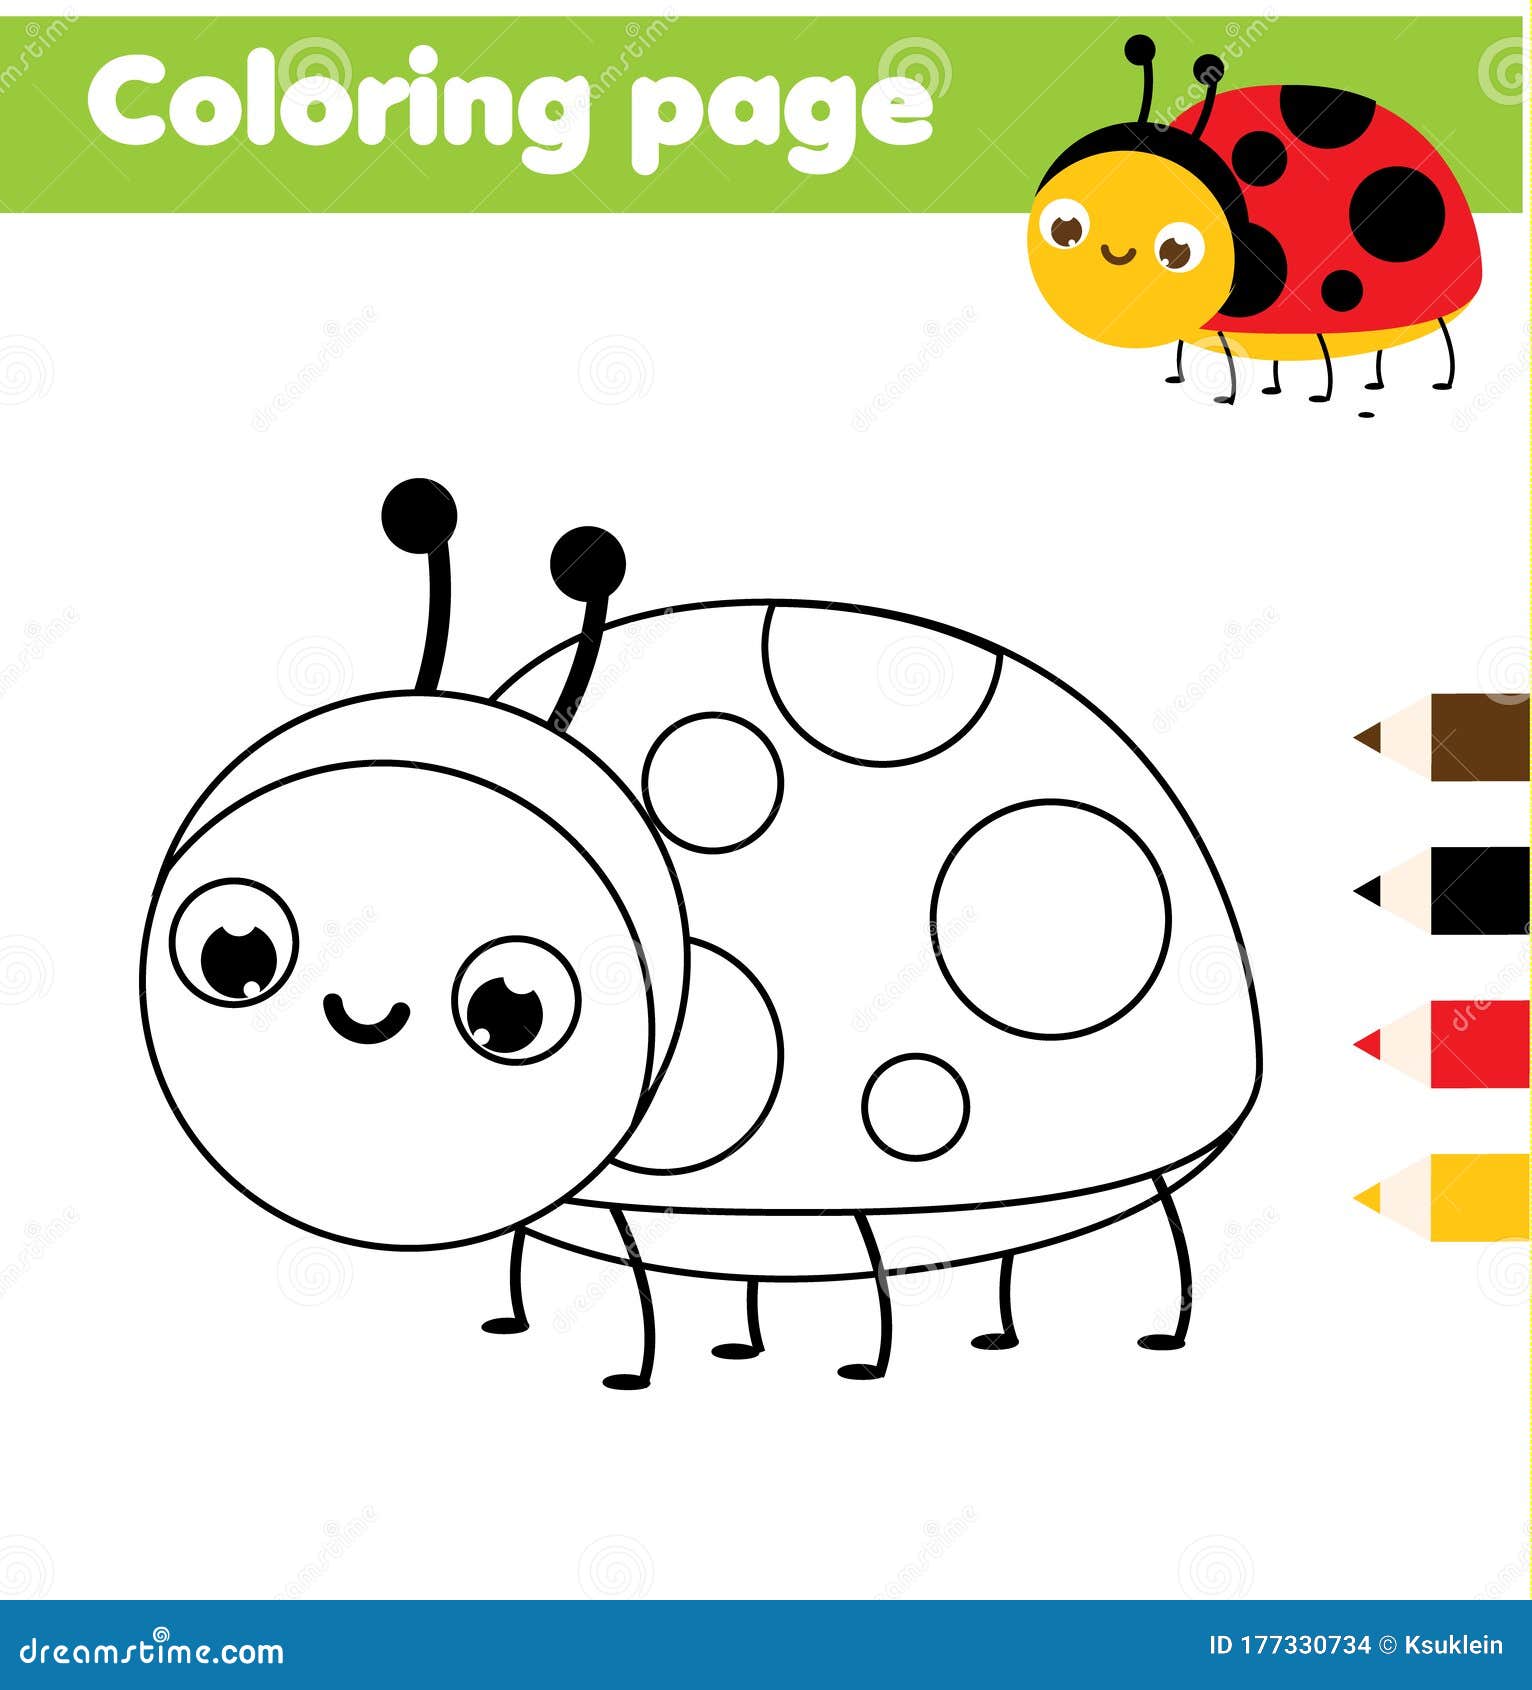 How to Draw a Ladybug | Bugs drawing, Ladybug art, Easy drawings